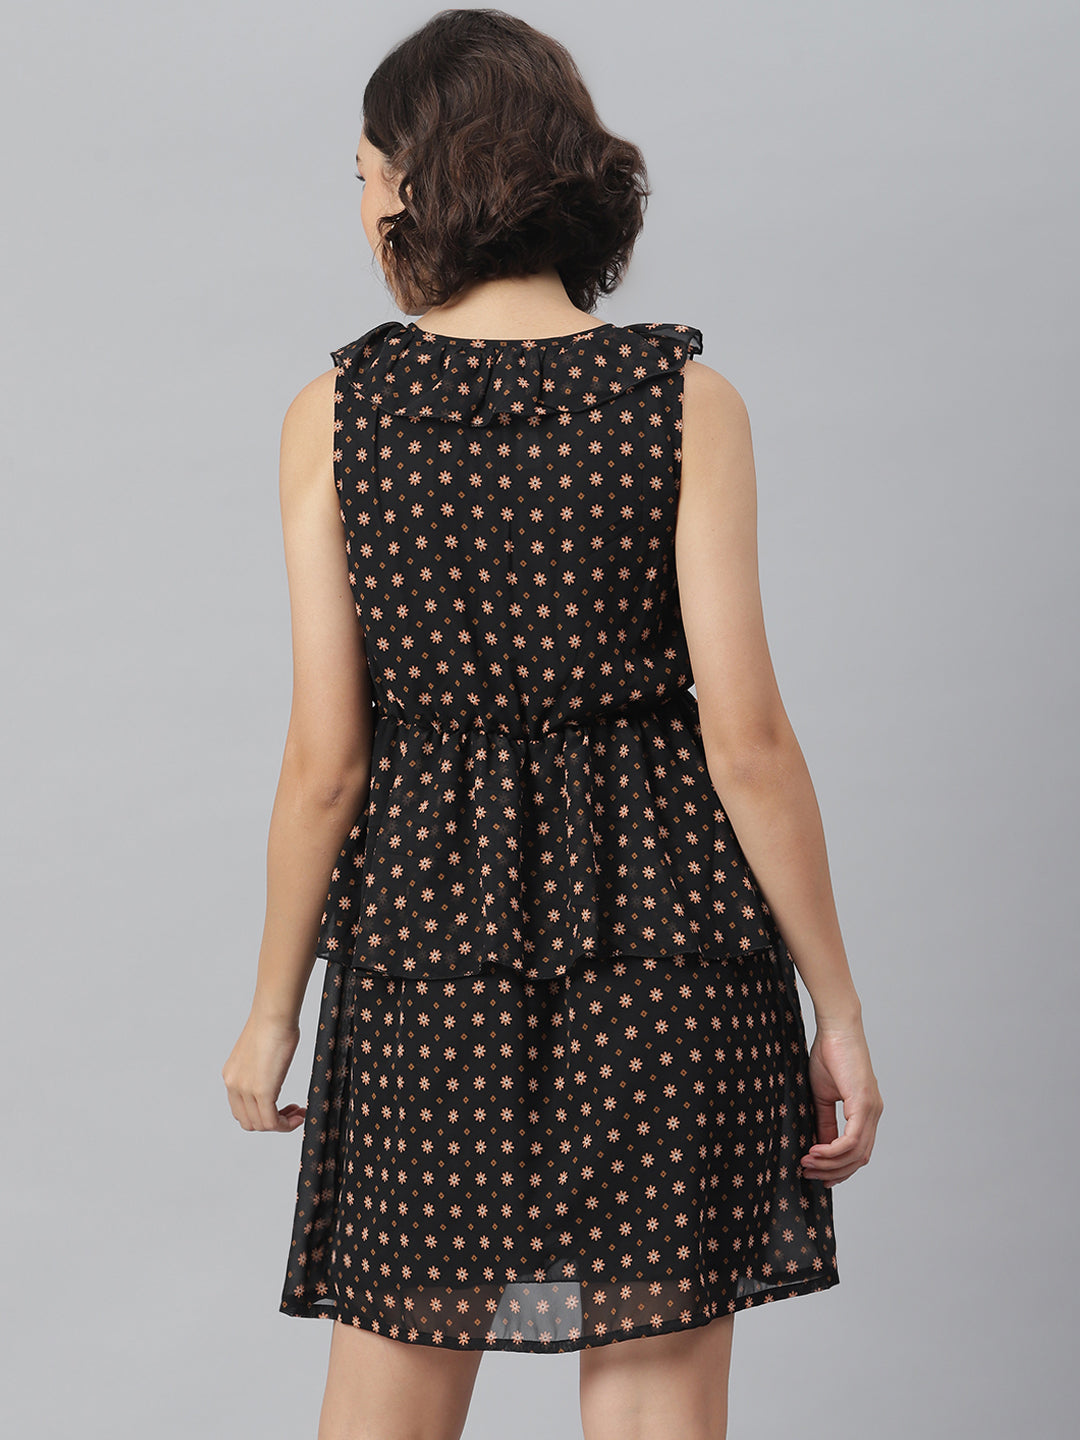 Women's Black Printed Peplum Style Dress - StyleStone